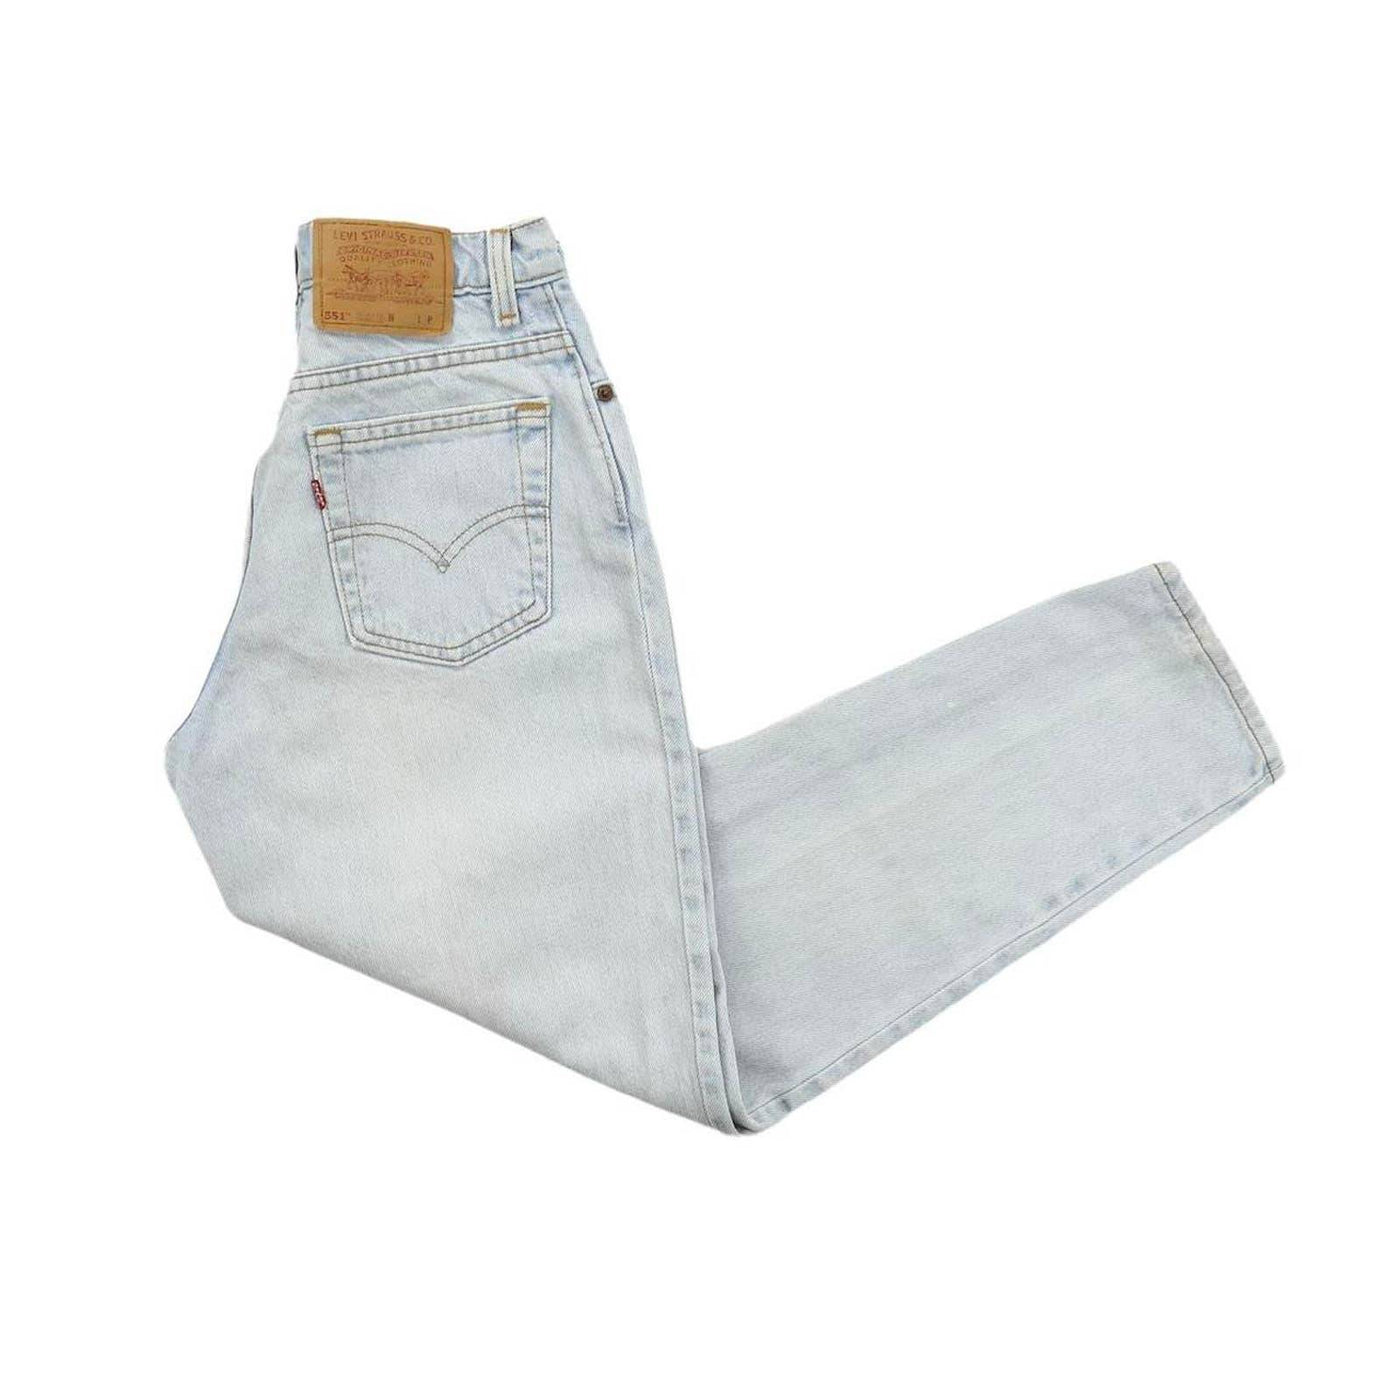 Vintage Levi’s 551 Light Wash High Waisted Jeans